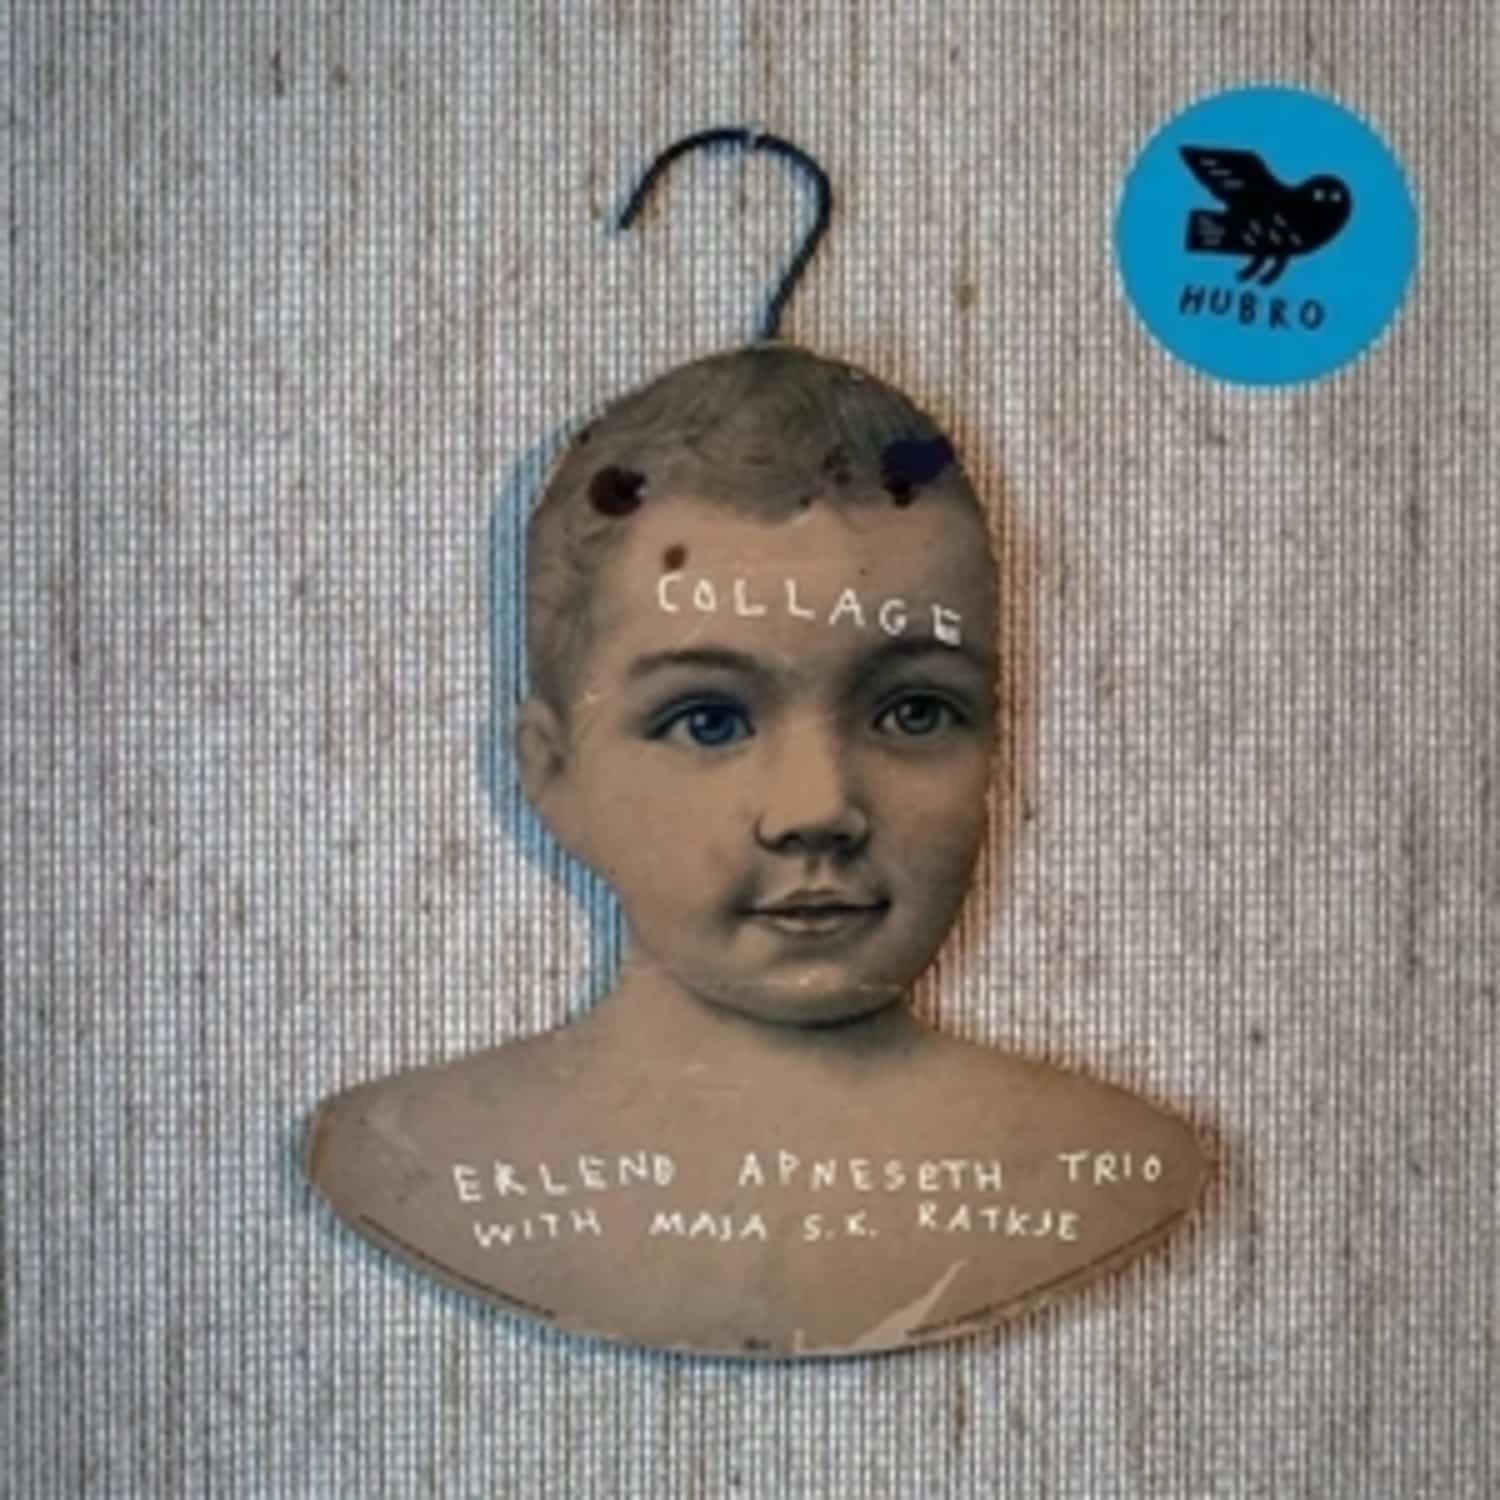 Erlend Apneseth Trio ft. Maja Ratkje - COLLAGE 